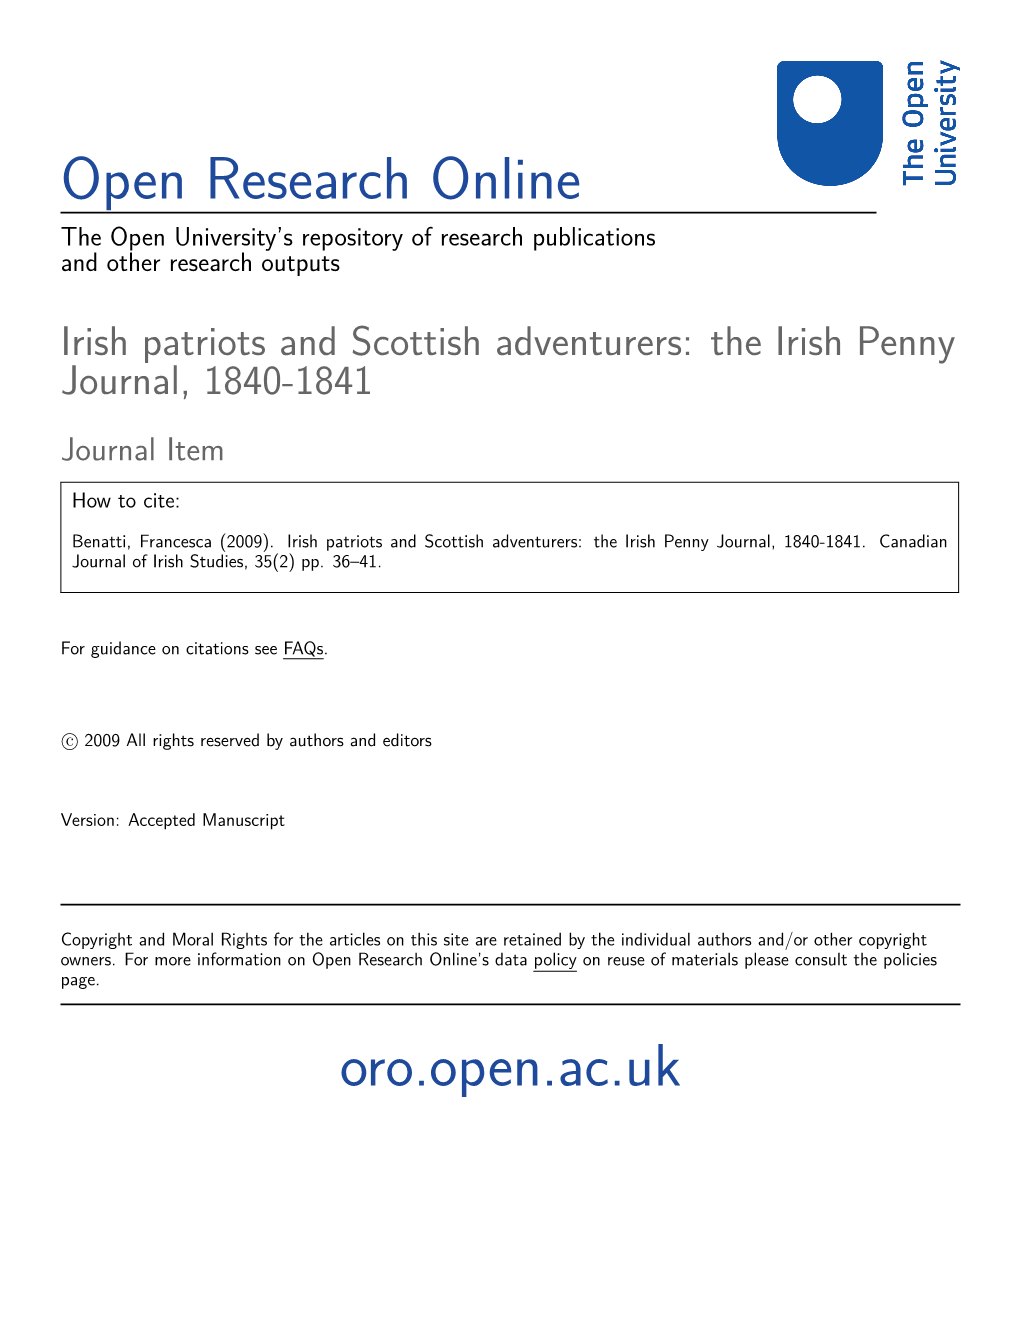 The Irish Penny Journal, 1840-1841 Journal Item